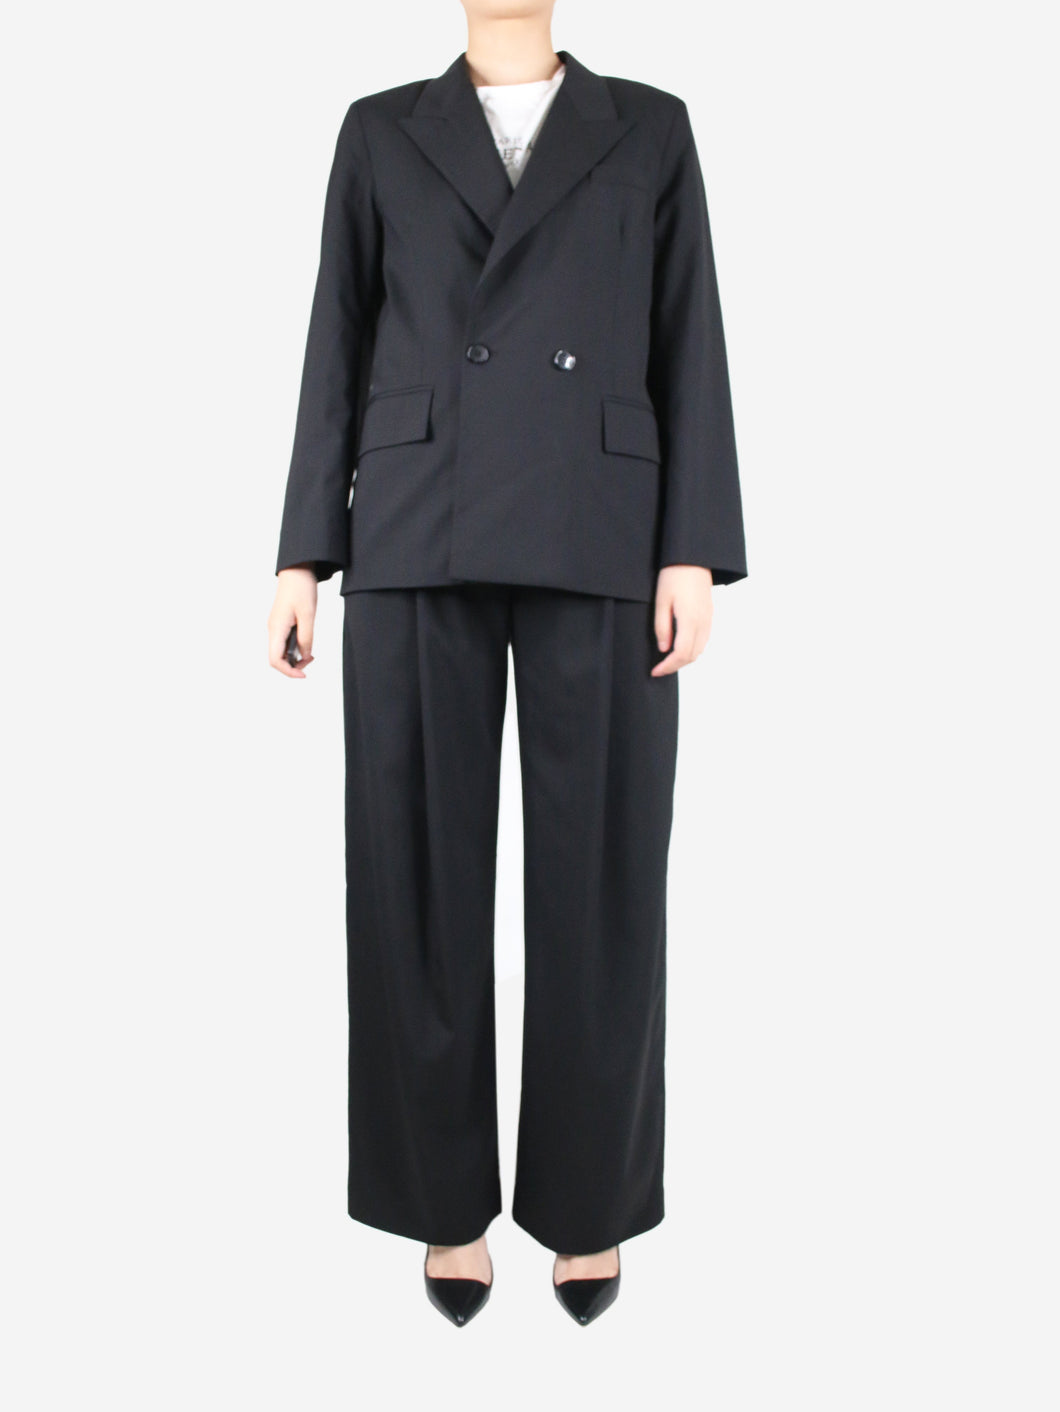 Black double-breasted blazer and trousers set - size UK 8/10 Coats & Jackets Victoria Beckham 